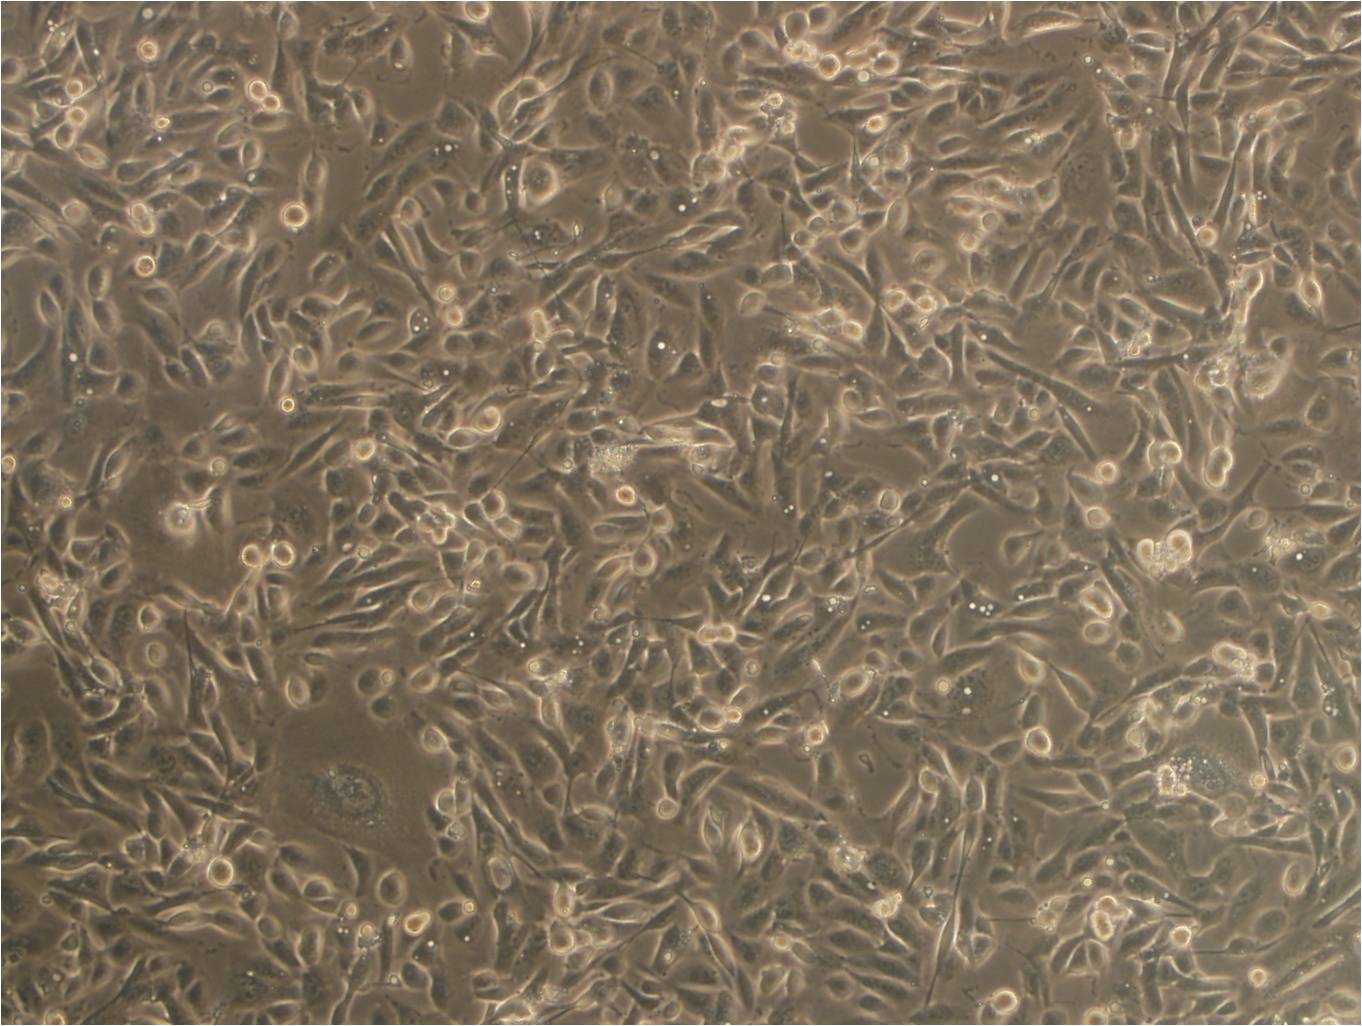 RWPE-1 Cell|人正常前列腺上皮细胞